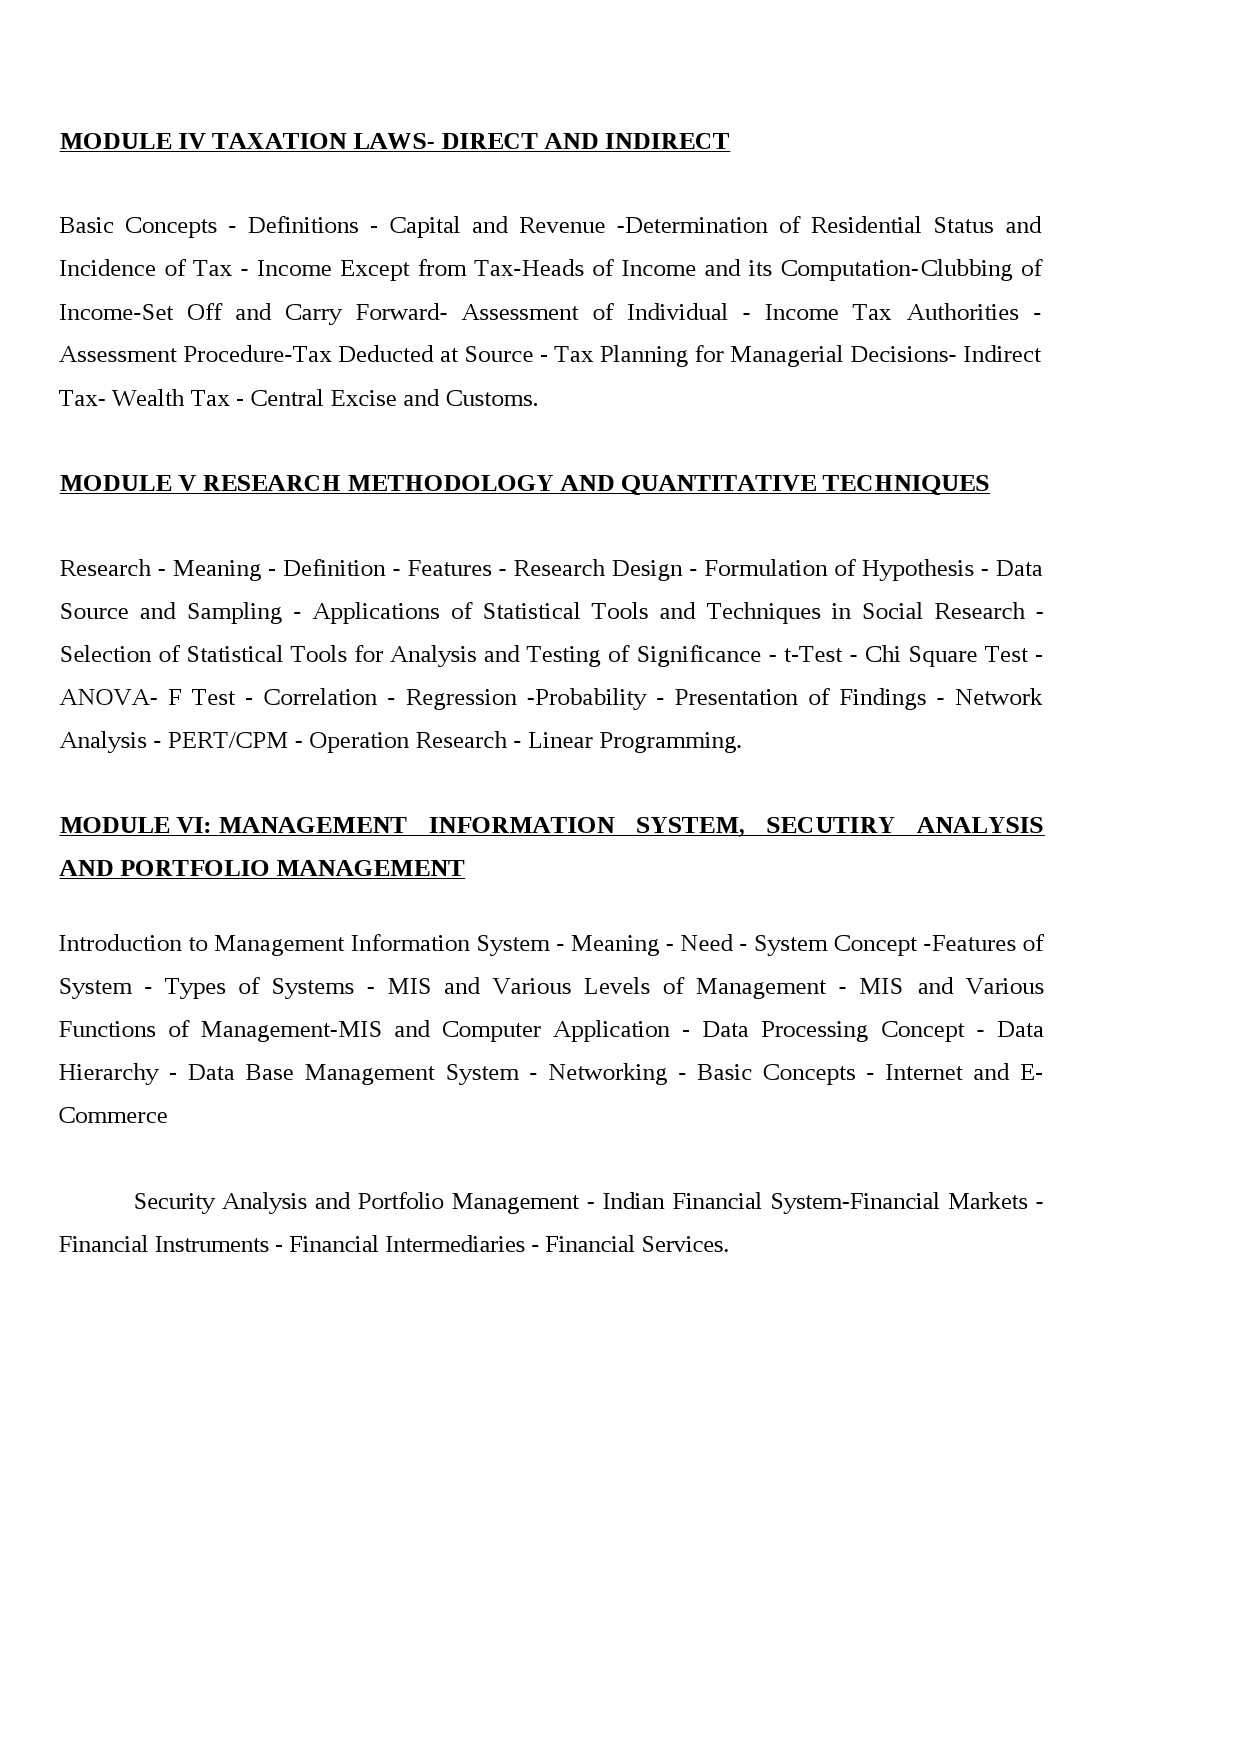 Humanities Syllabus for Kerala PSC 2021 Exam - Notification Image 29